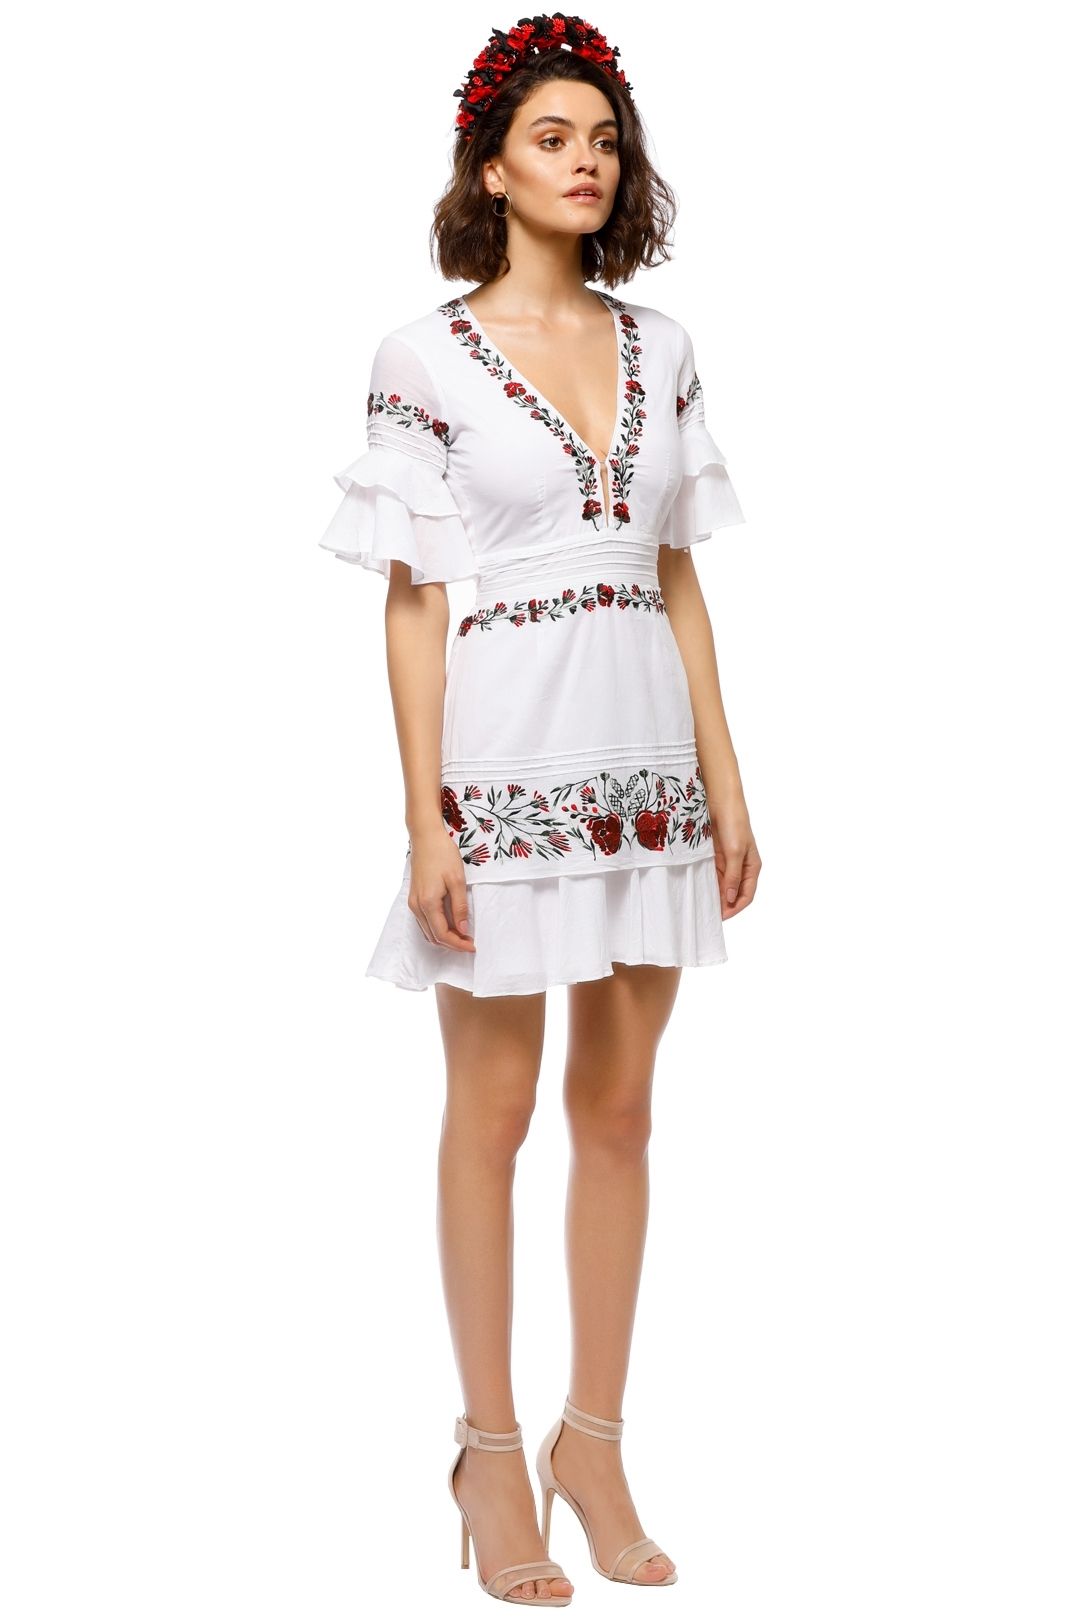 Saylor - Jayne Mini Dress - White - Side